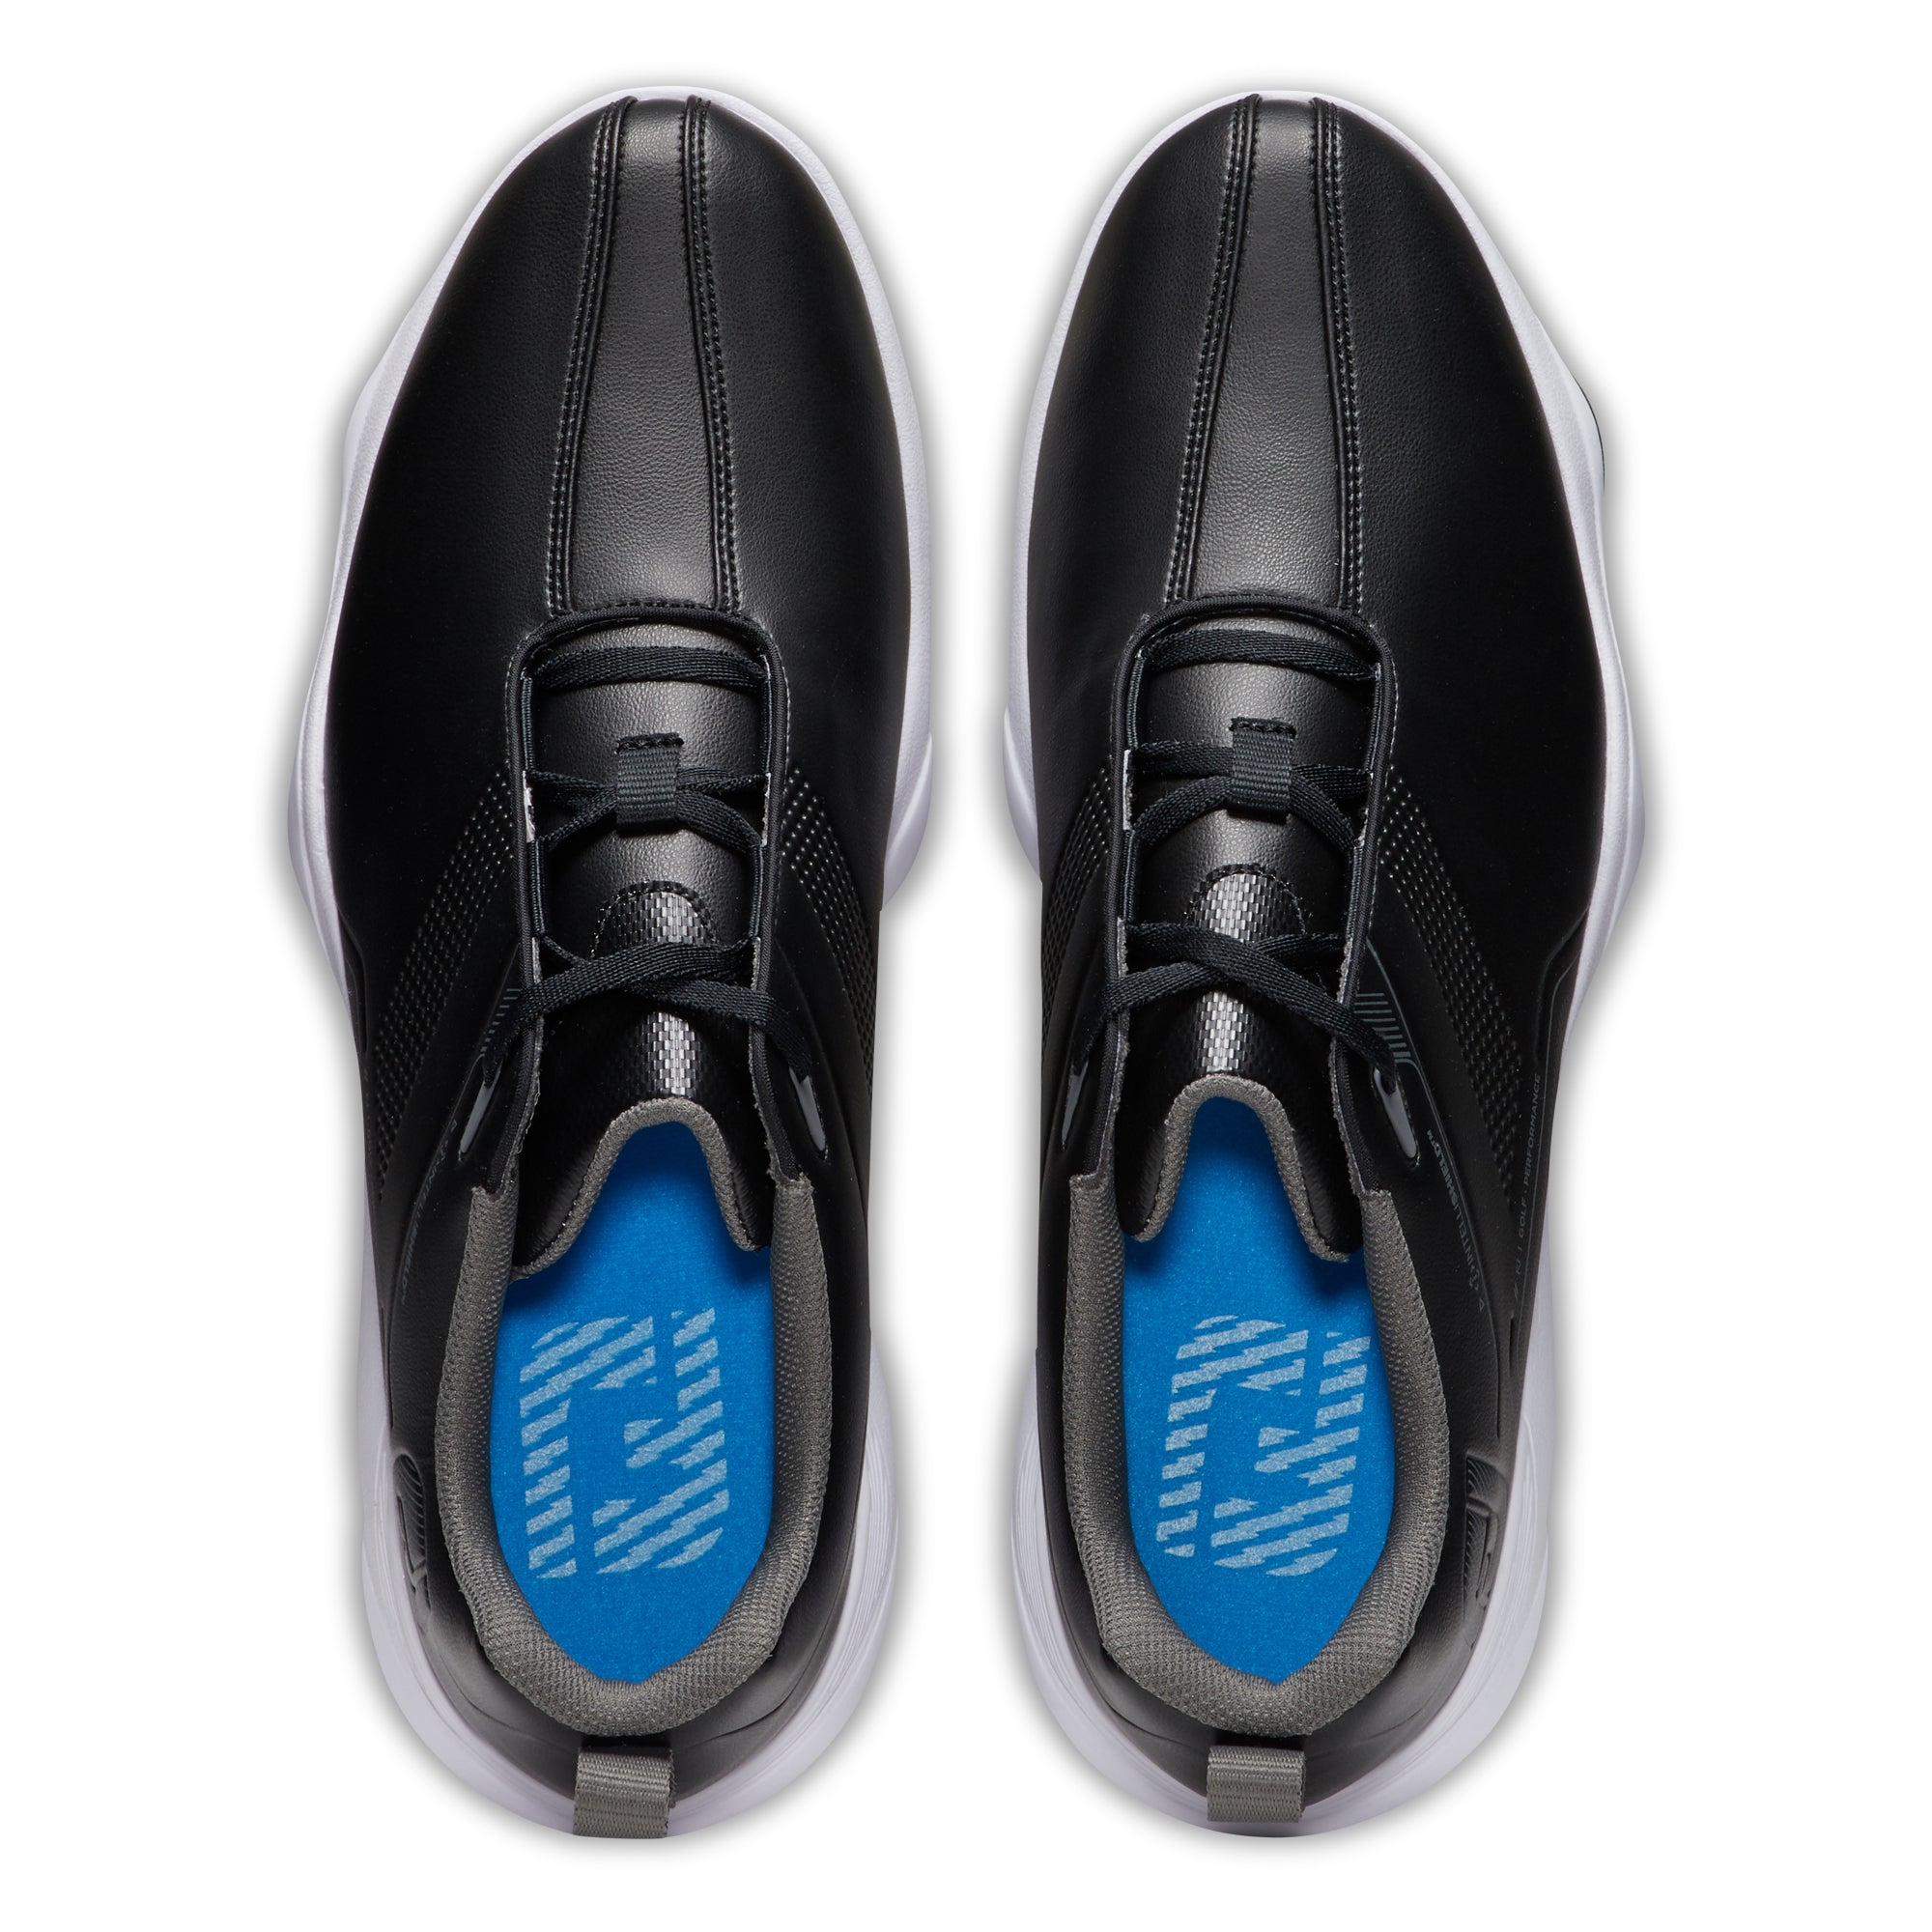 footjoy-ecomfort-golf-shoes-57700-black